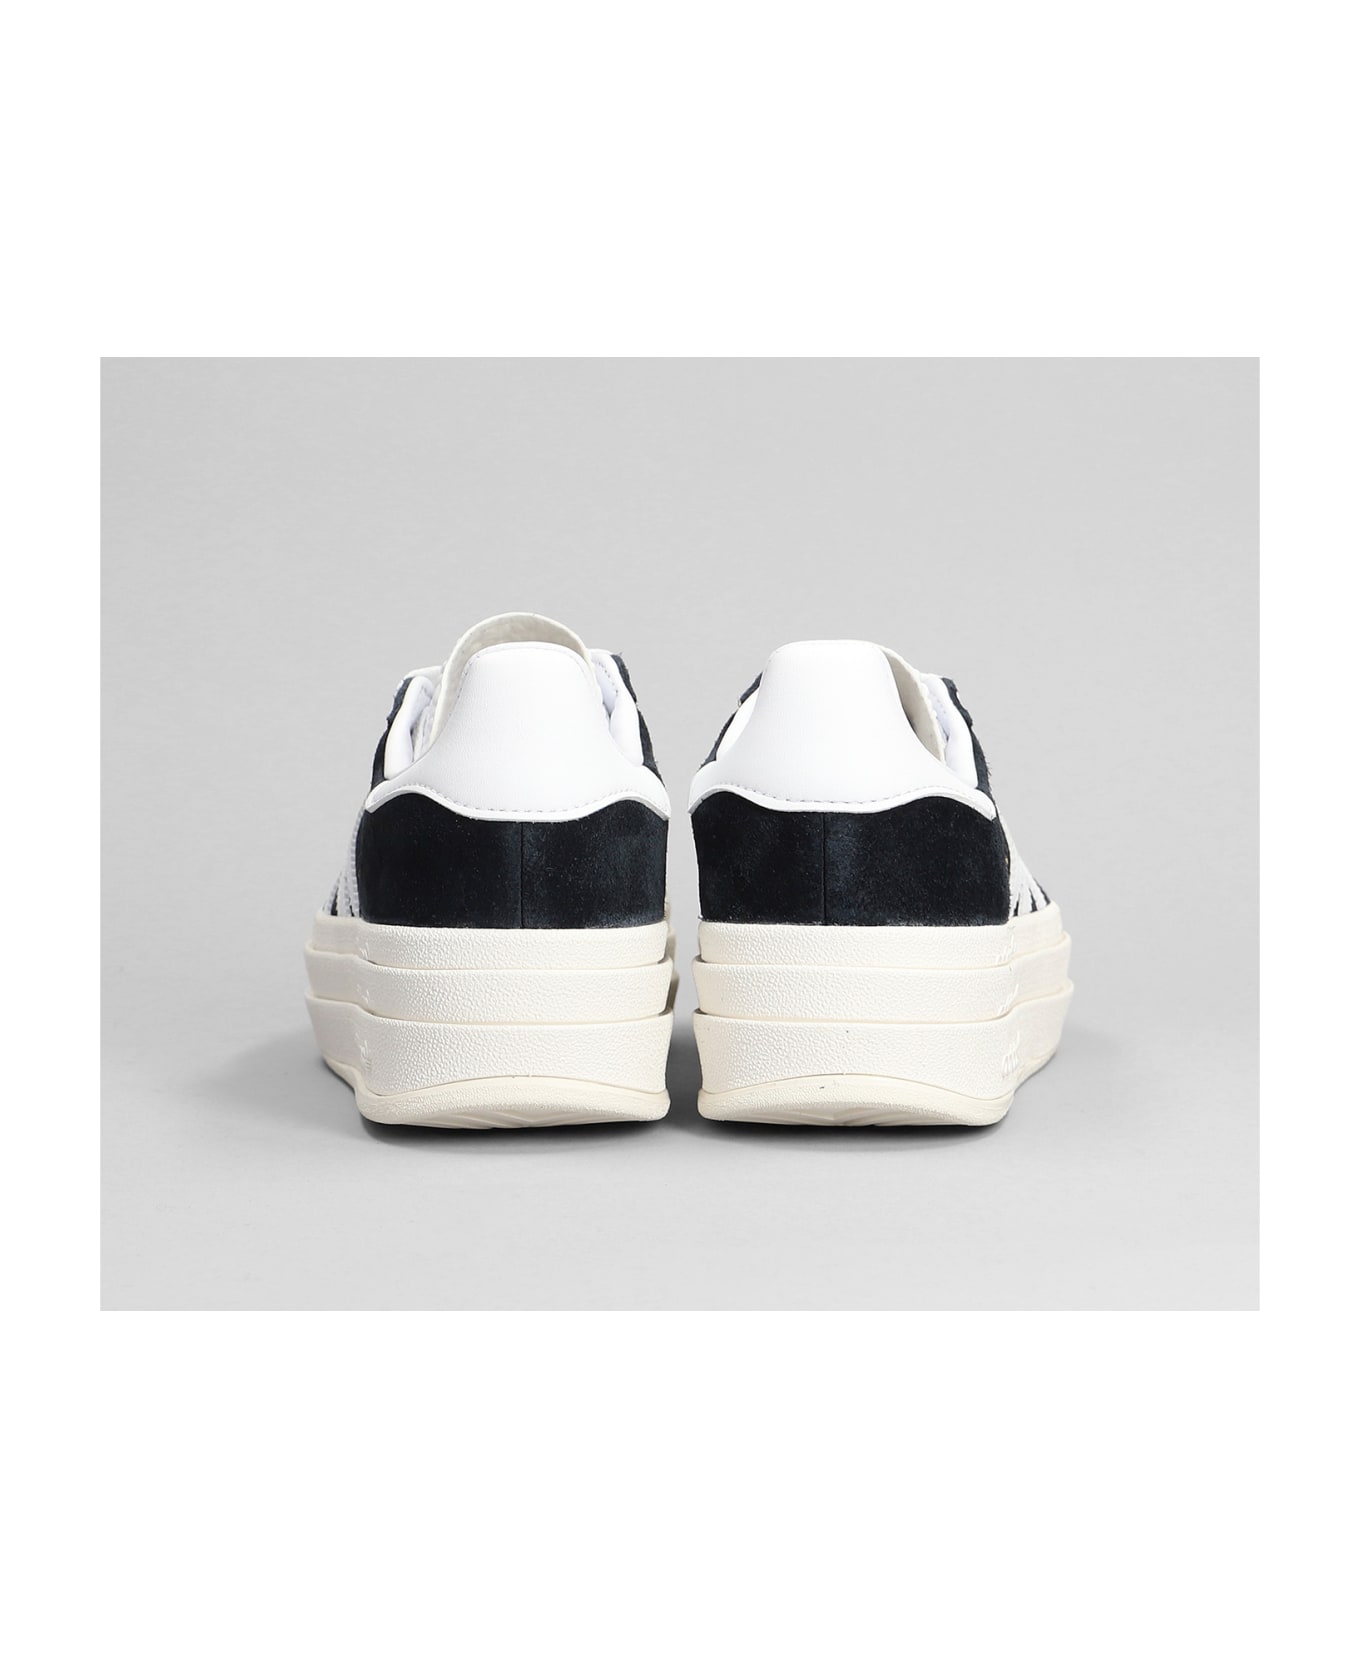 Adidas Originals Gazelle Bold Sneakers - Black スニーカー